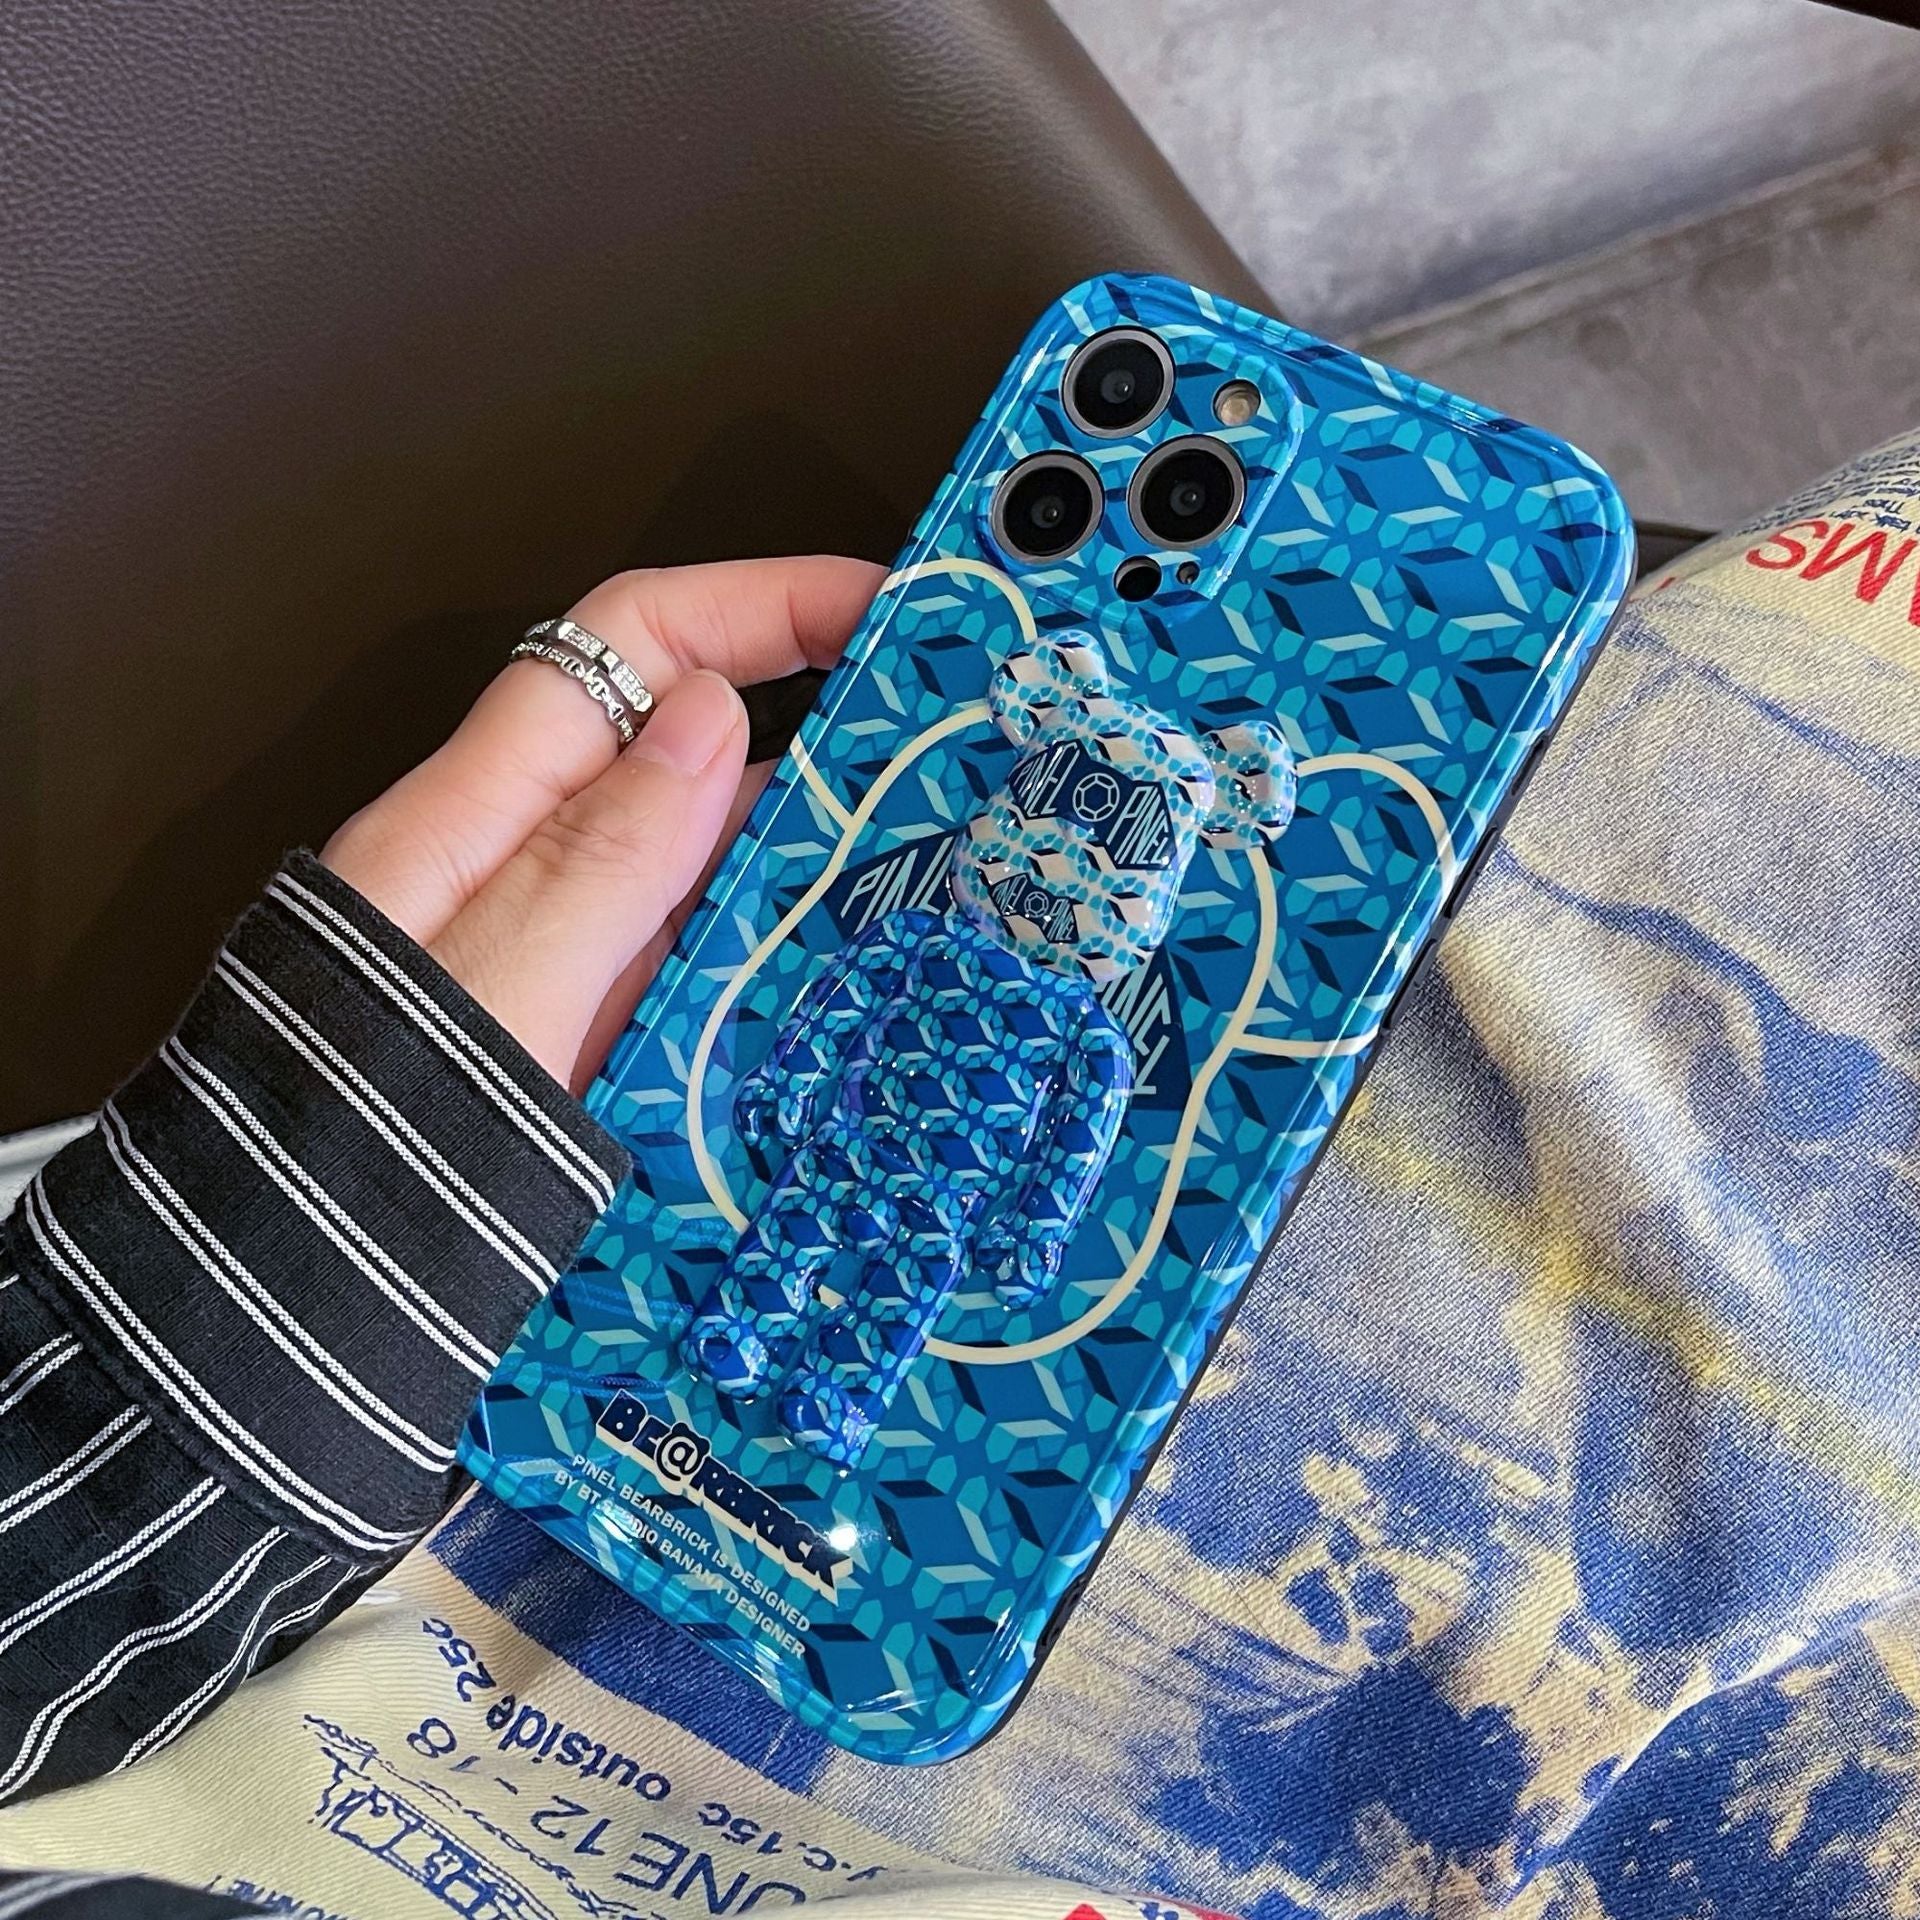 3D Pinel et Pinel Bearbrick Phone Case